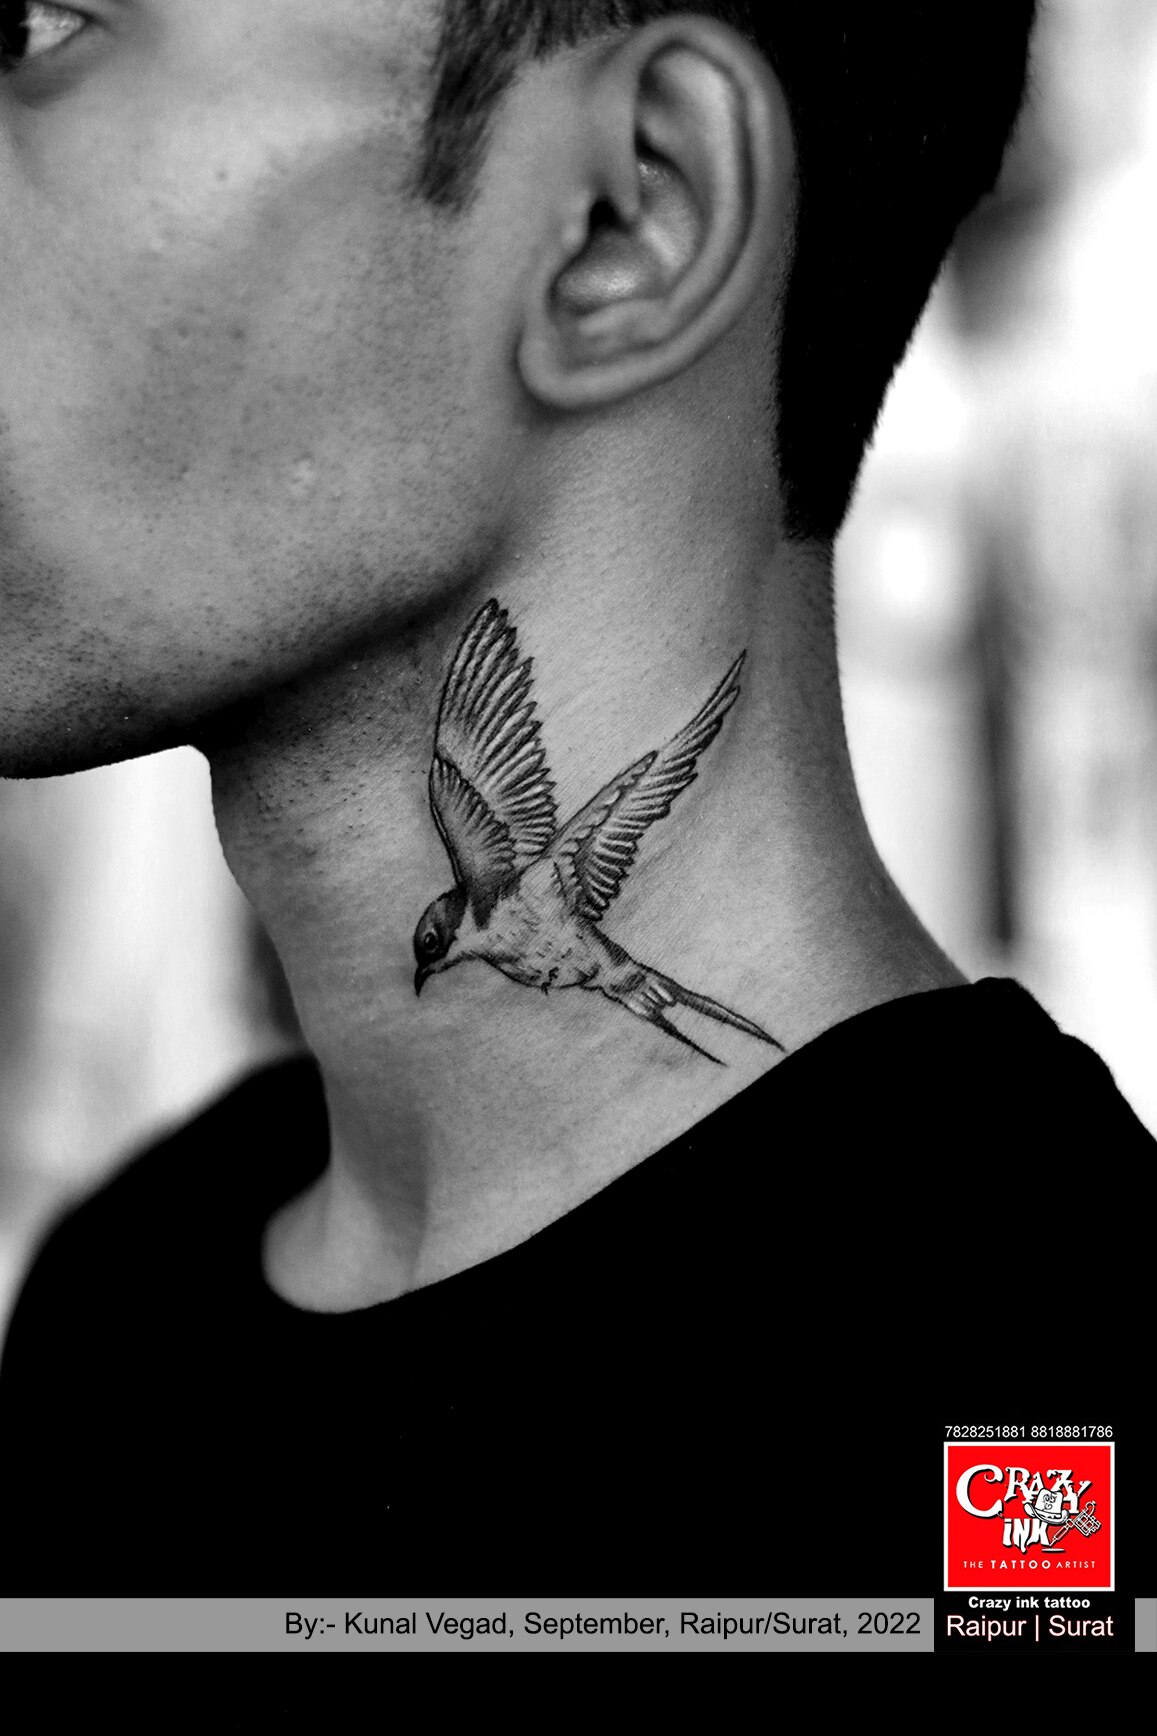 Crazy ink tattoo & Body piercing on Twitter: 